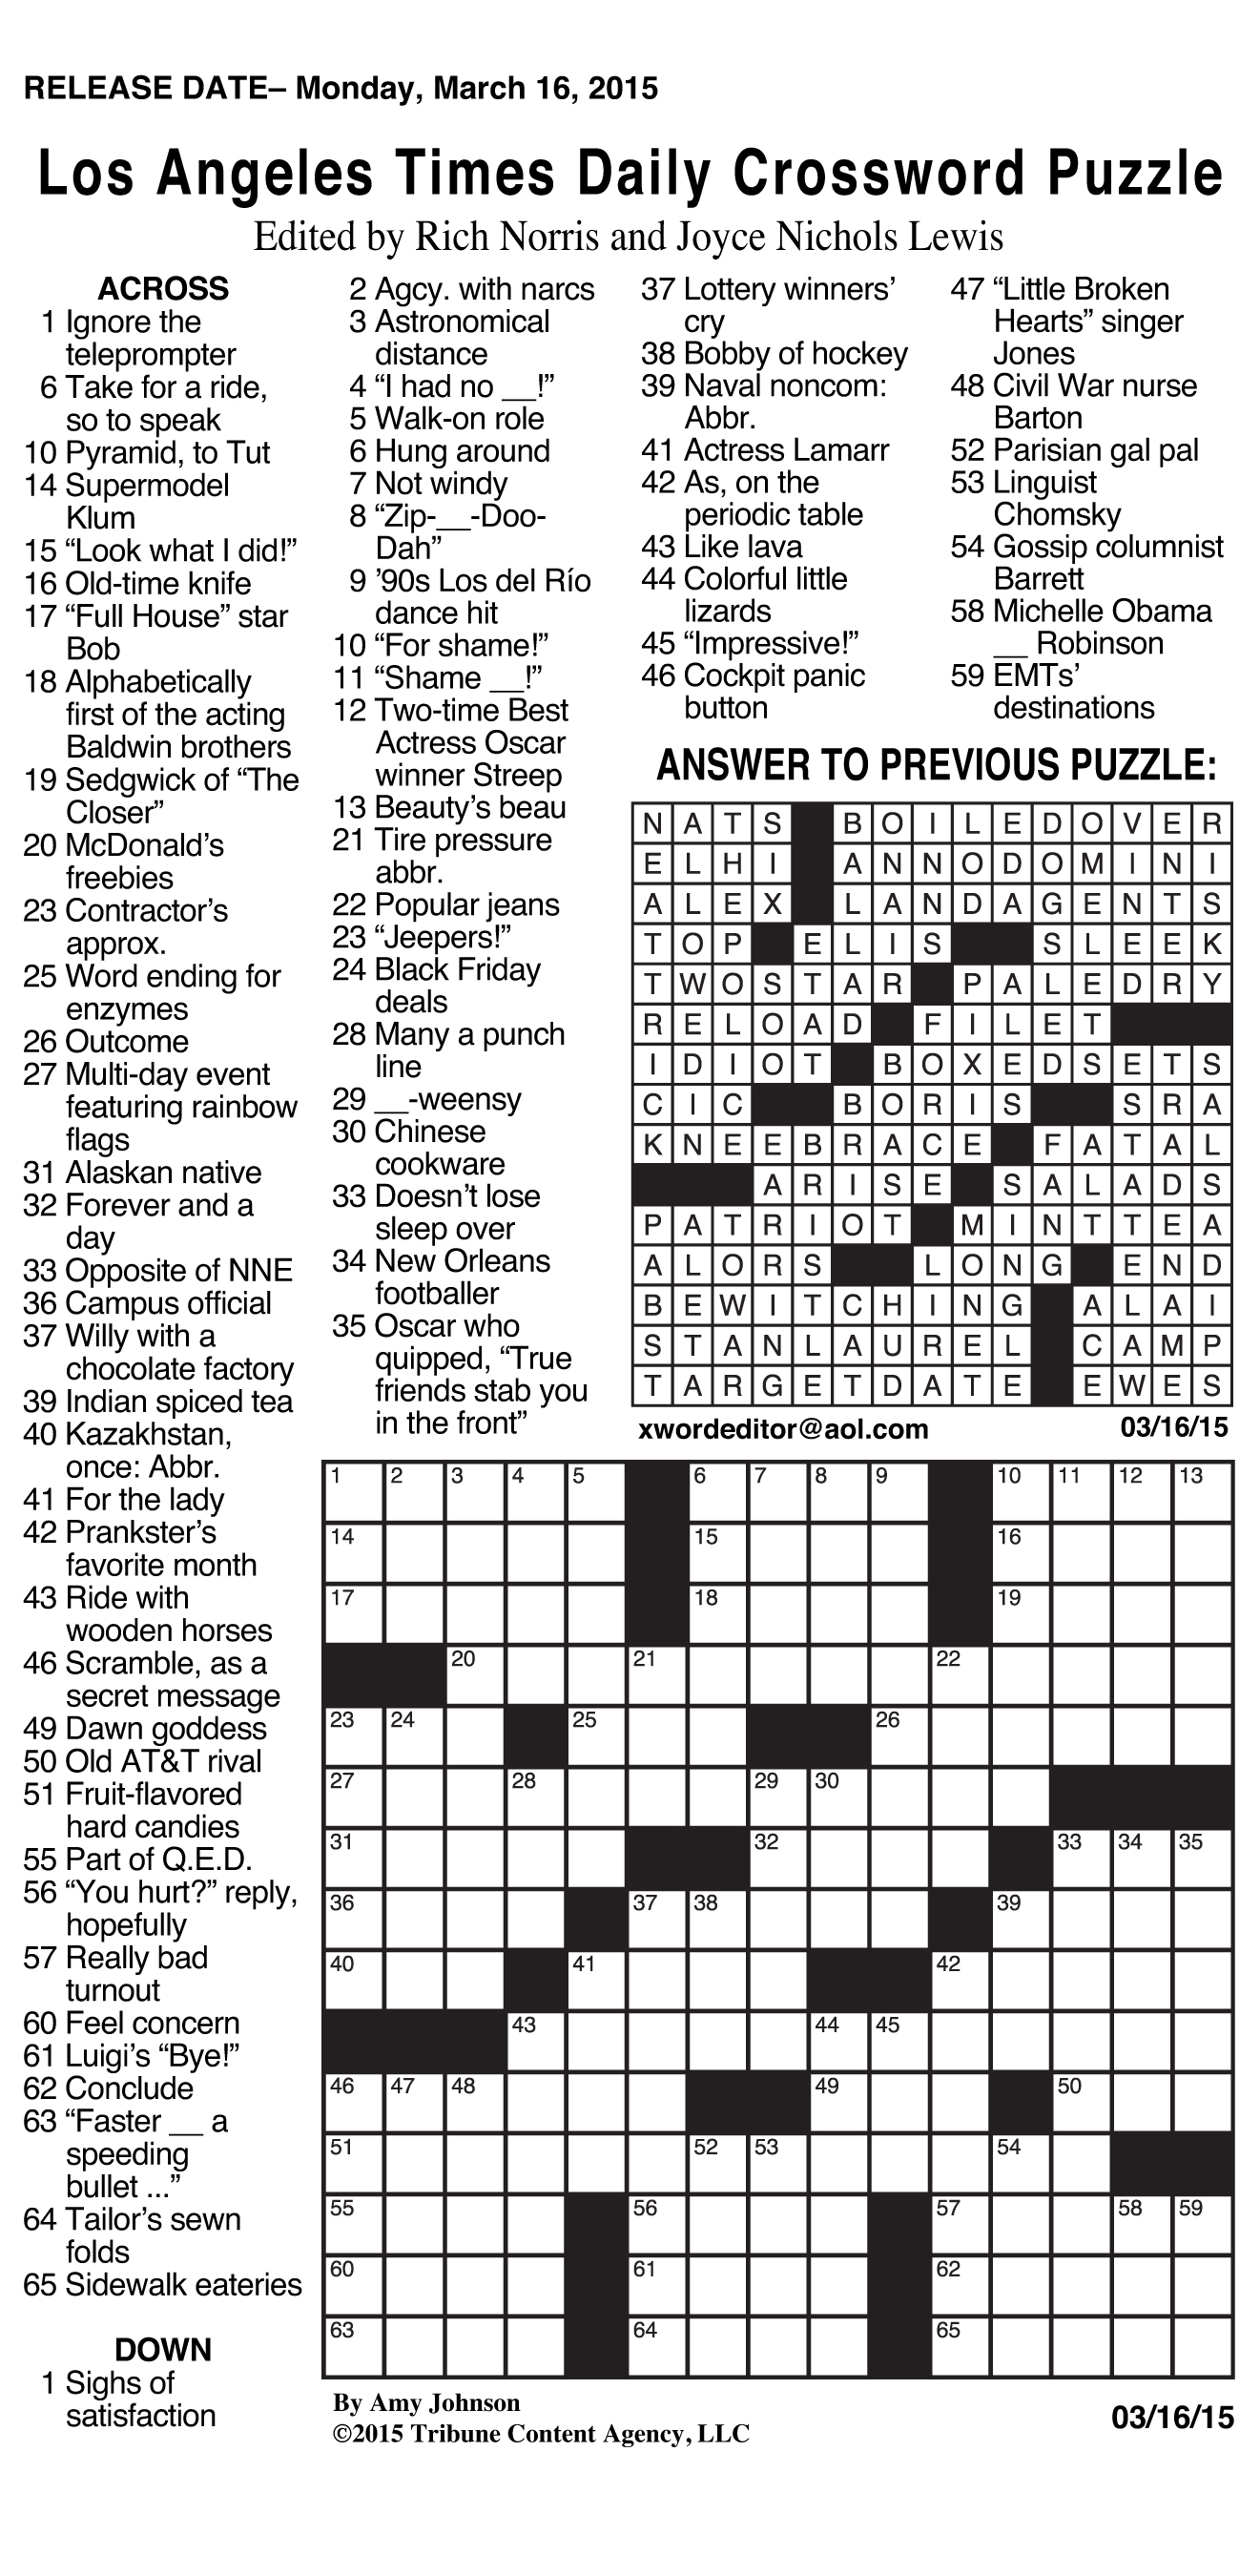 Sample Of Los Angeles Times Daily Crossword Puzzle | Tribune Content - La Times Printable Crossword 2015